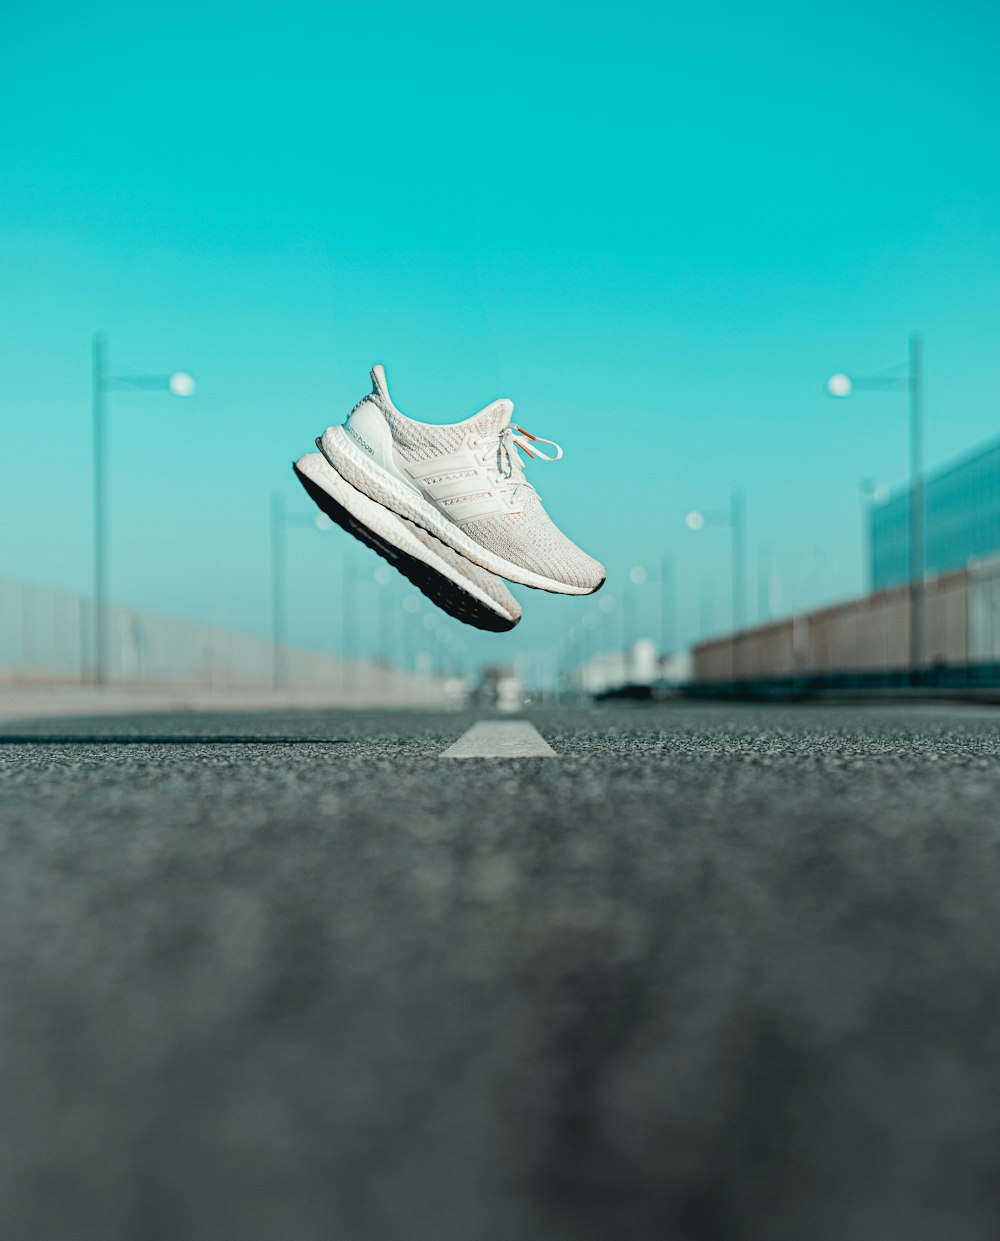 white nike athletic shoe on road during daytime